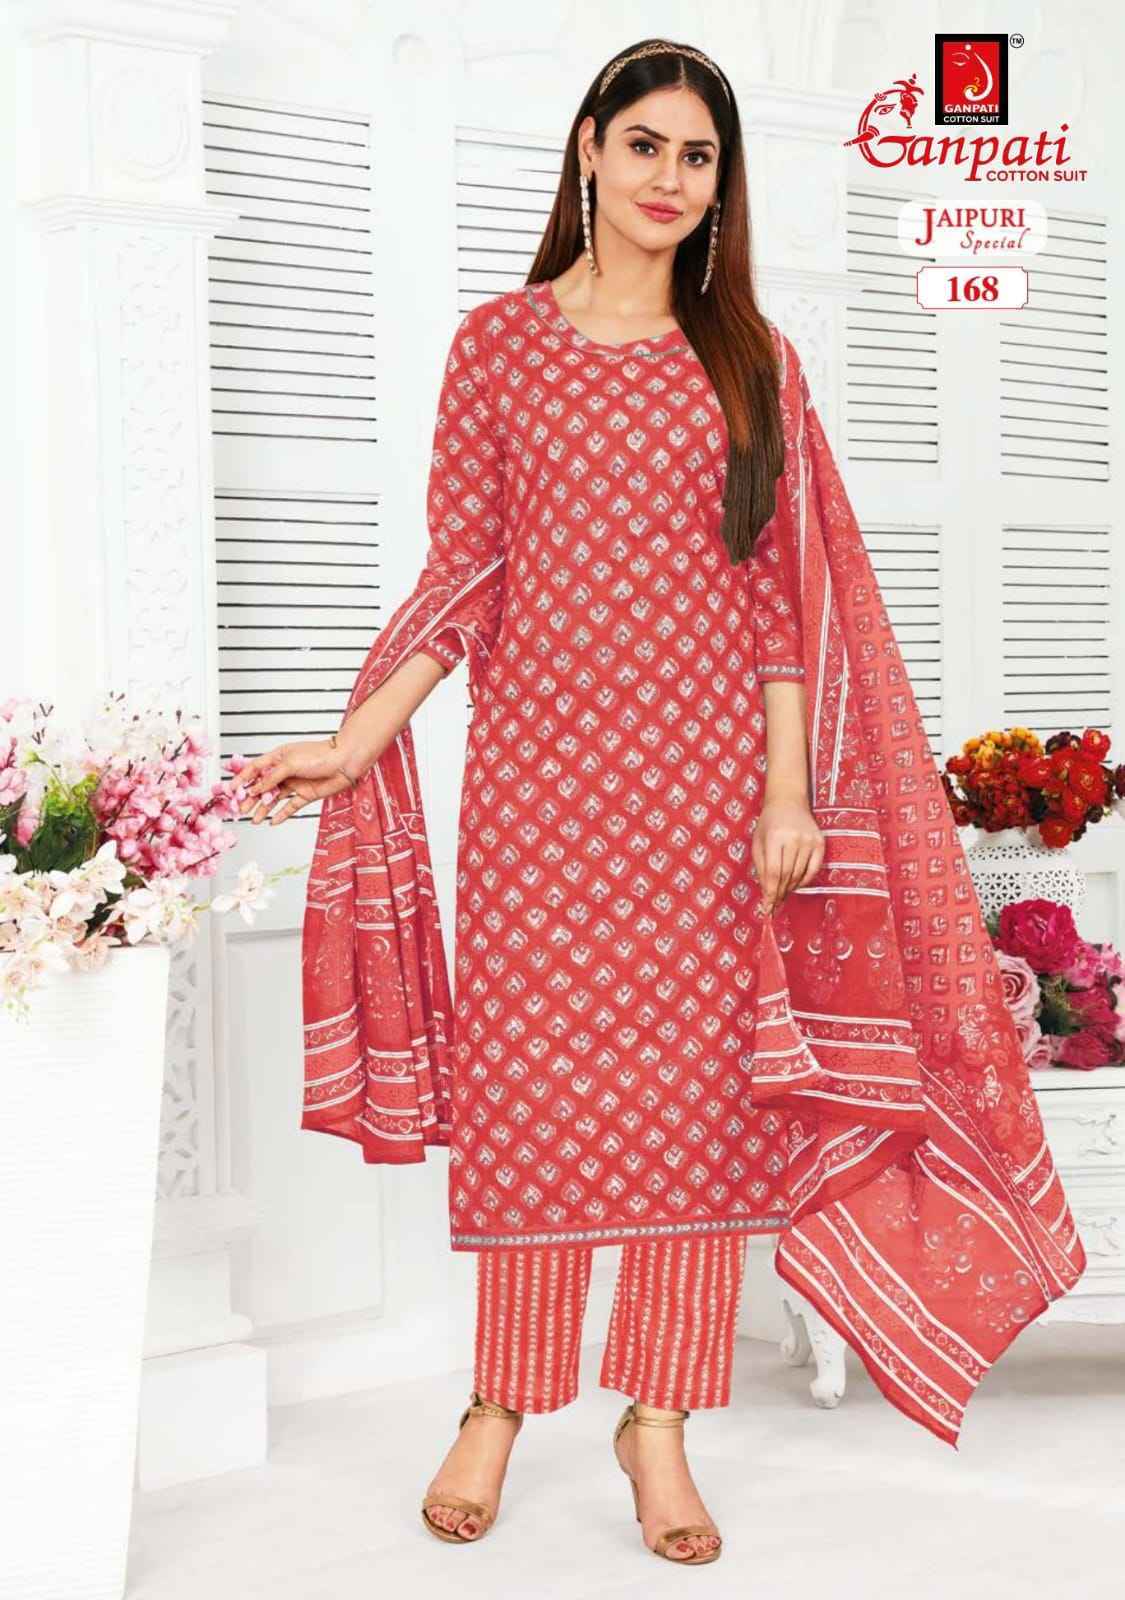 Ganpati Jaipuri Special Vol 5 Readymade Cotton Dress 15 pcs Catalogue